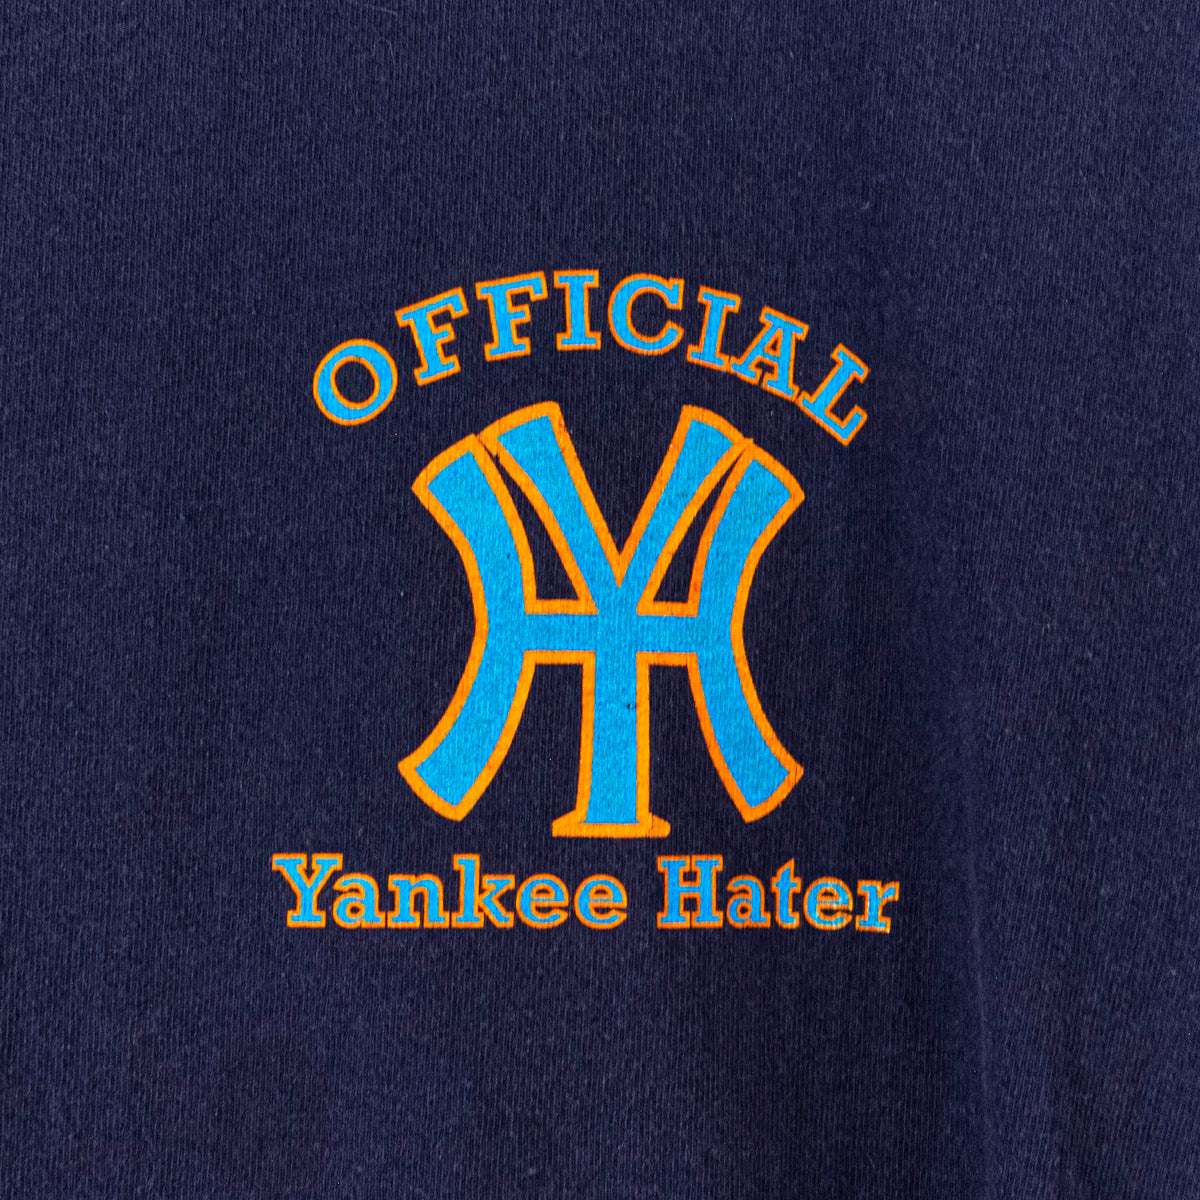 Yankee Hater